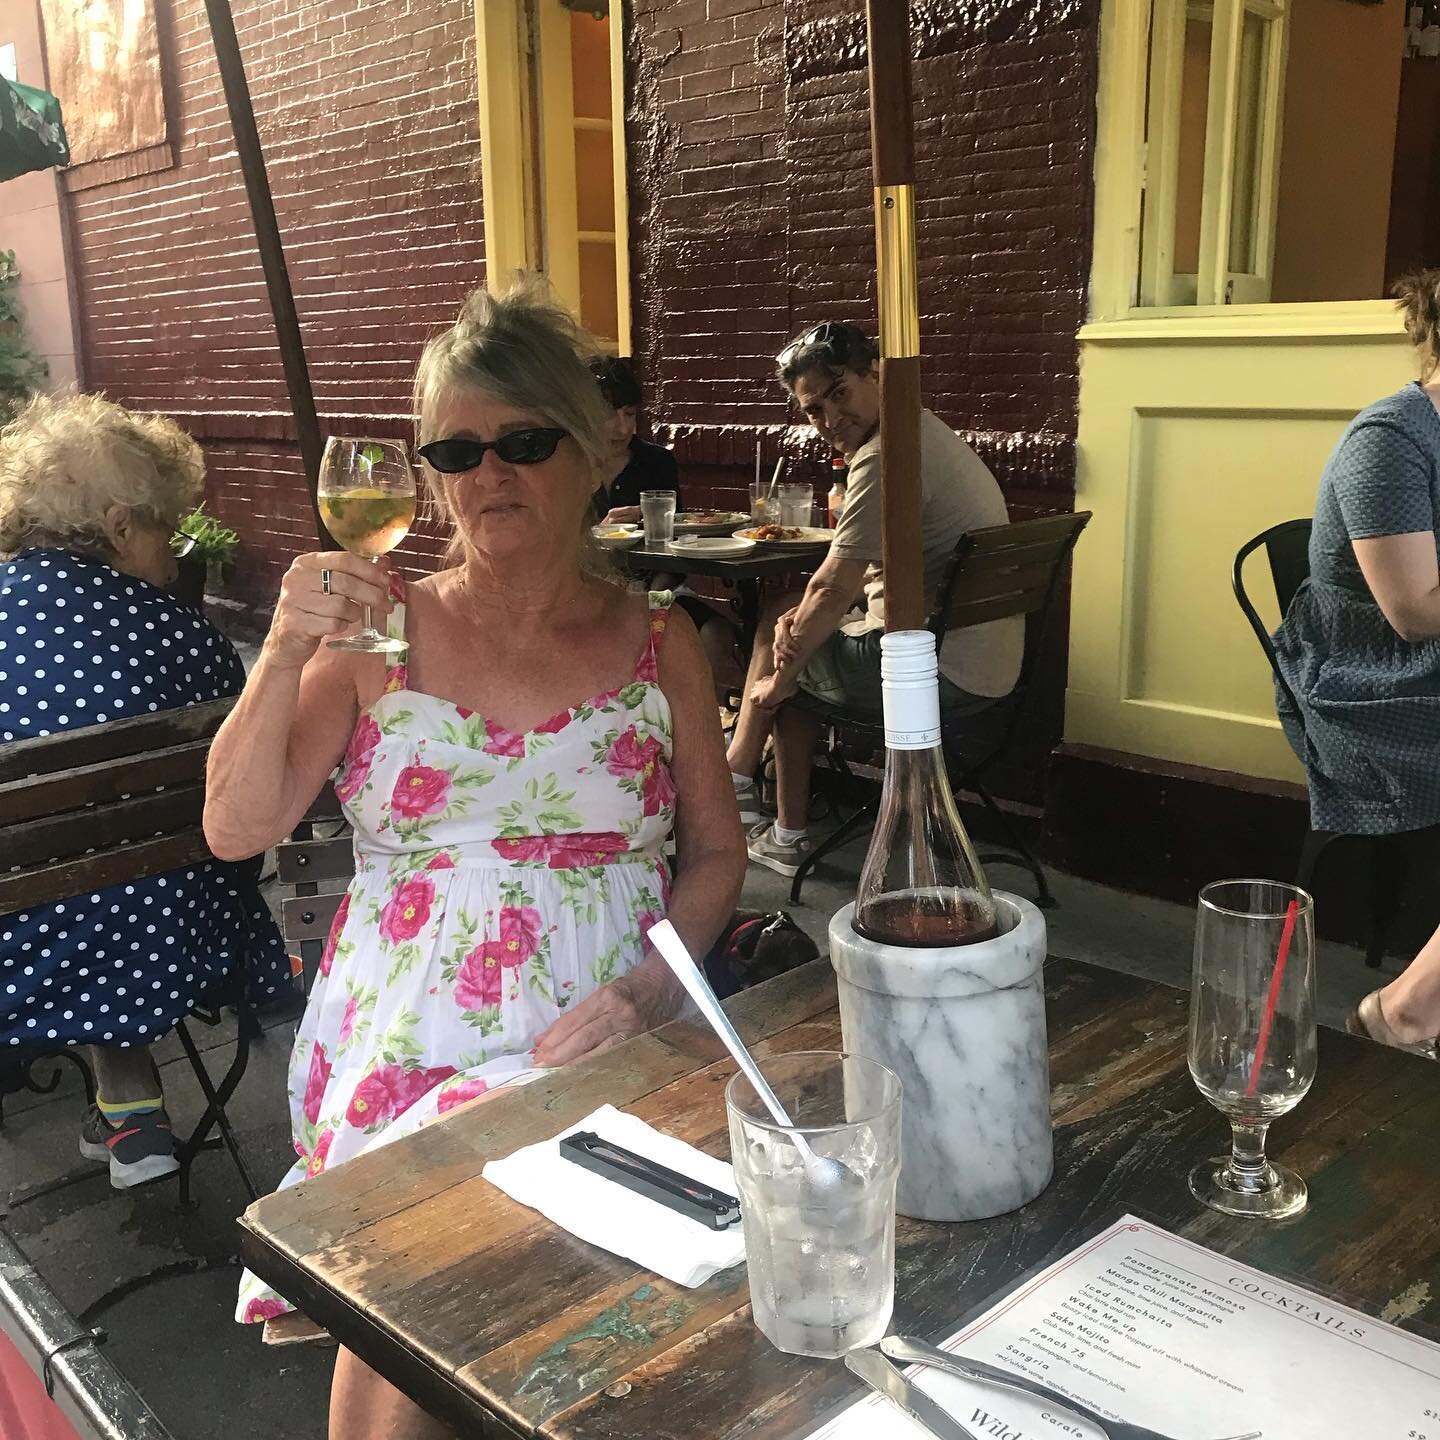 Our dear customer Lesley is enjoying her bottle of wine 🍷
.
.
Monday - Tuesday &amp; Wednesday all wine bottles 
half off🍷🍾@busstopcafe #WhereHudsonMeetsBethune

.
.
#monday #mondaymood #wine  #winelovers #halfoff #bestdeal #AllWineBottlesHalfOff